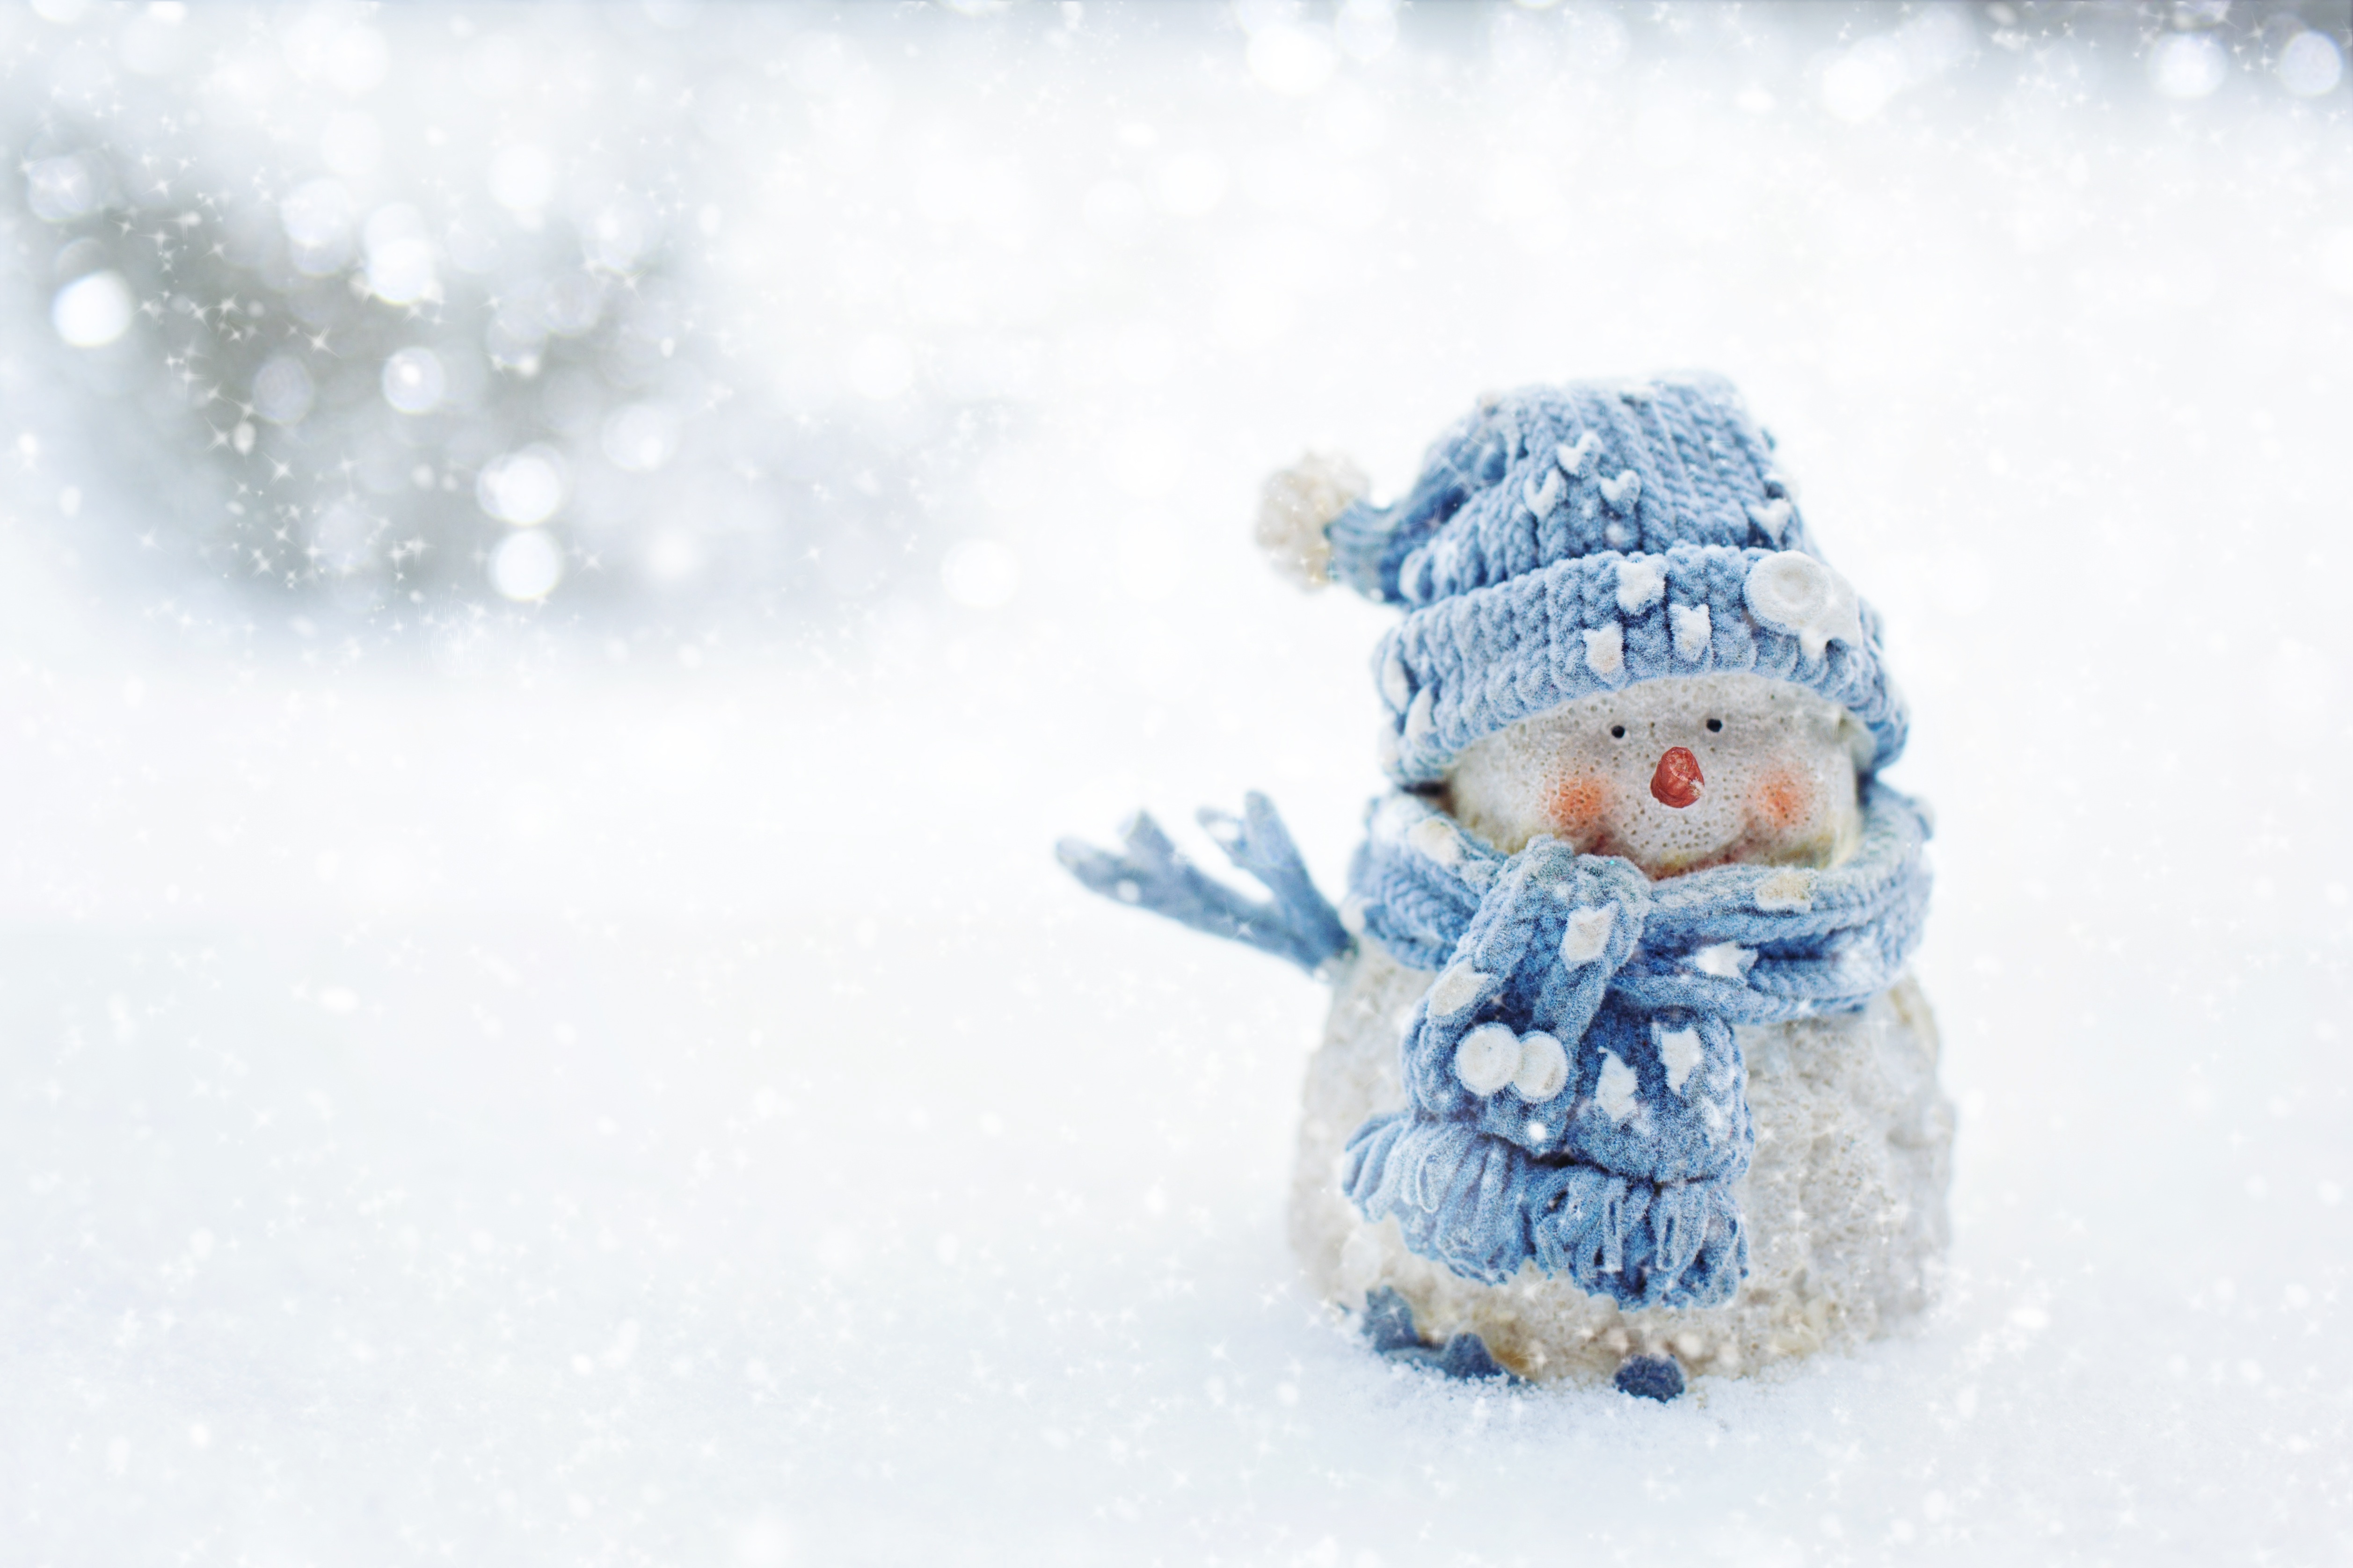 Christmas Snowfall Snowman Toy 5029x3352